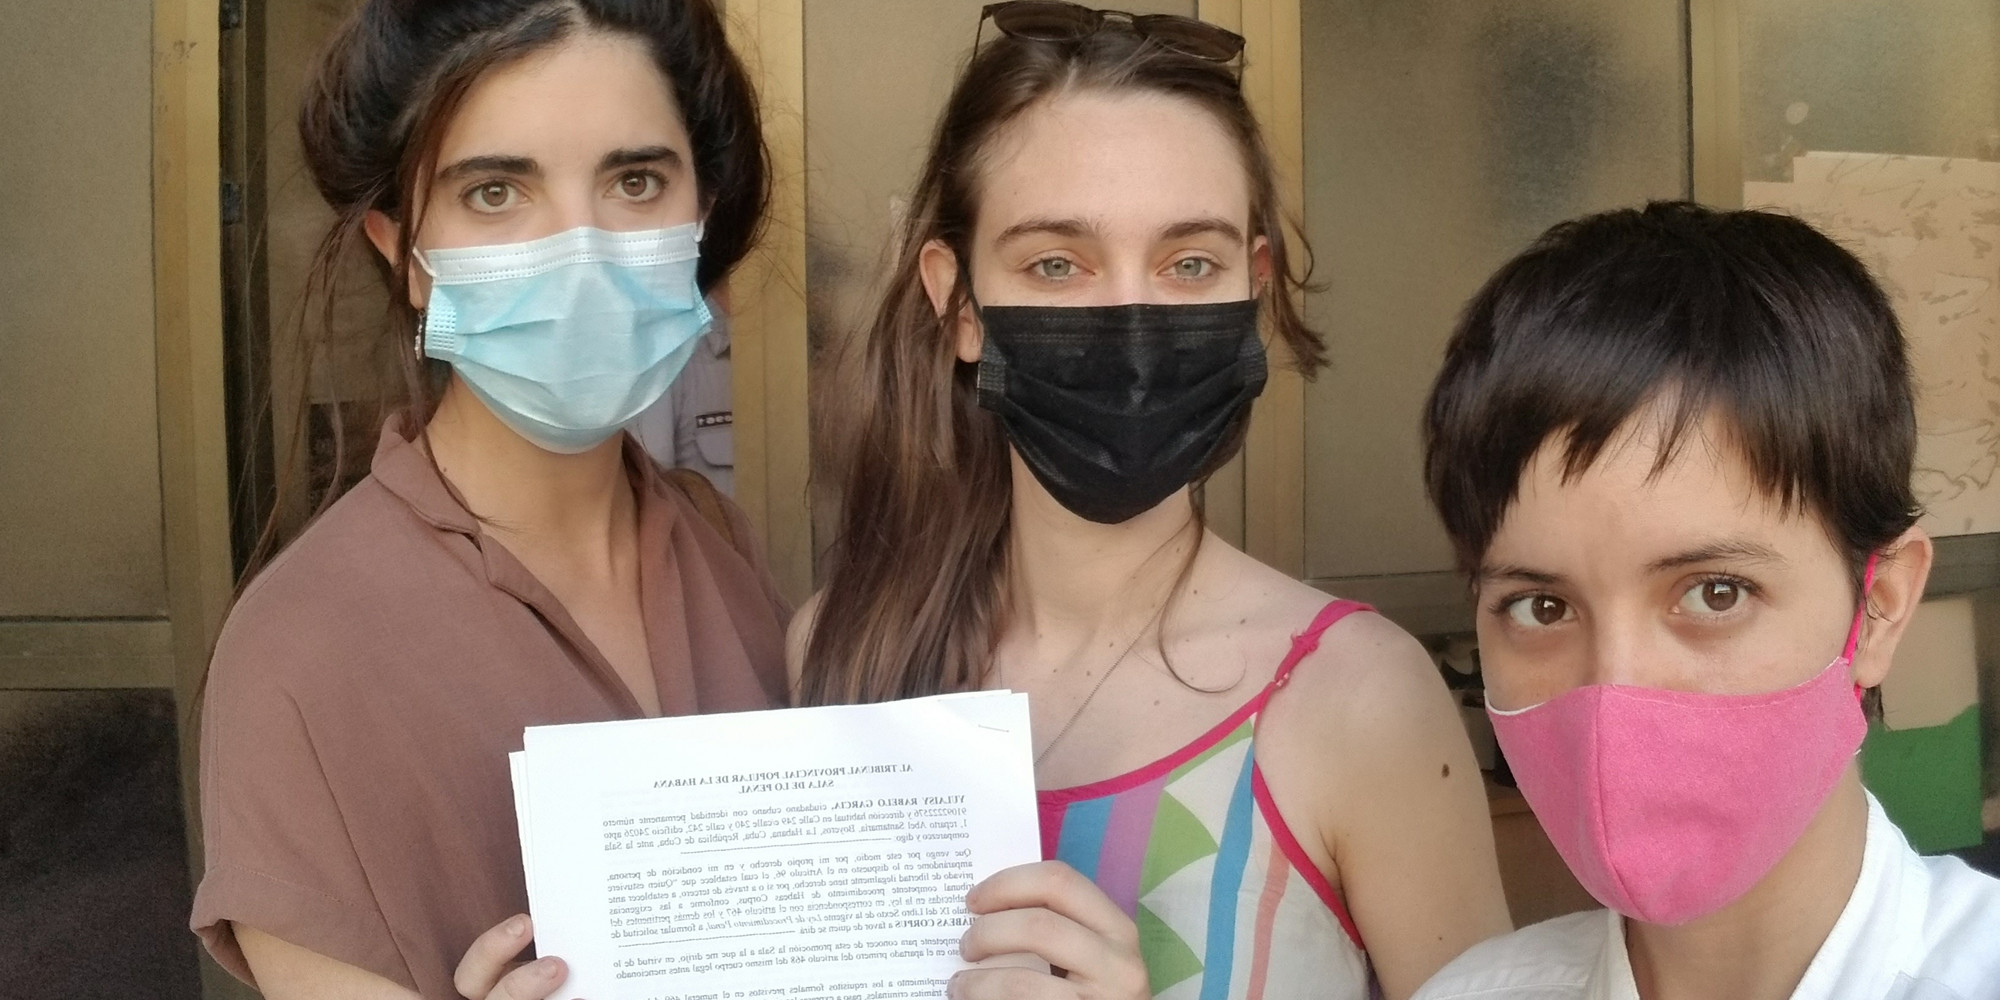 Carolina Barrero, Camila Ramírez Lobón, and Juliana Rabelo with a petition demanding an end to the harassment and detainment of Cuban artists. Photo courtesy of Juliana Rabelo